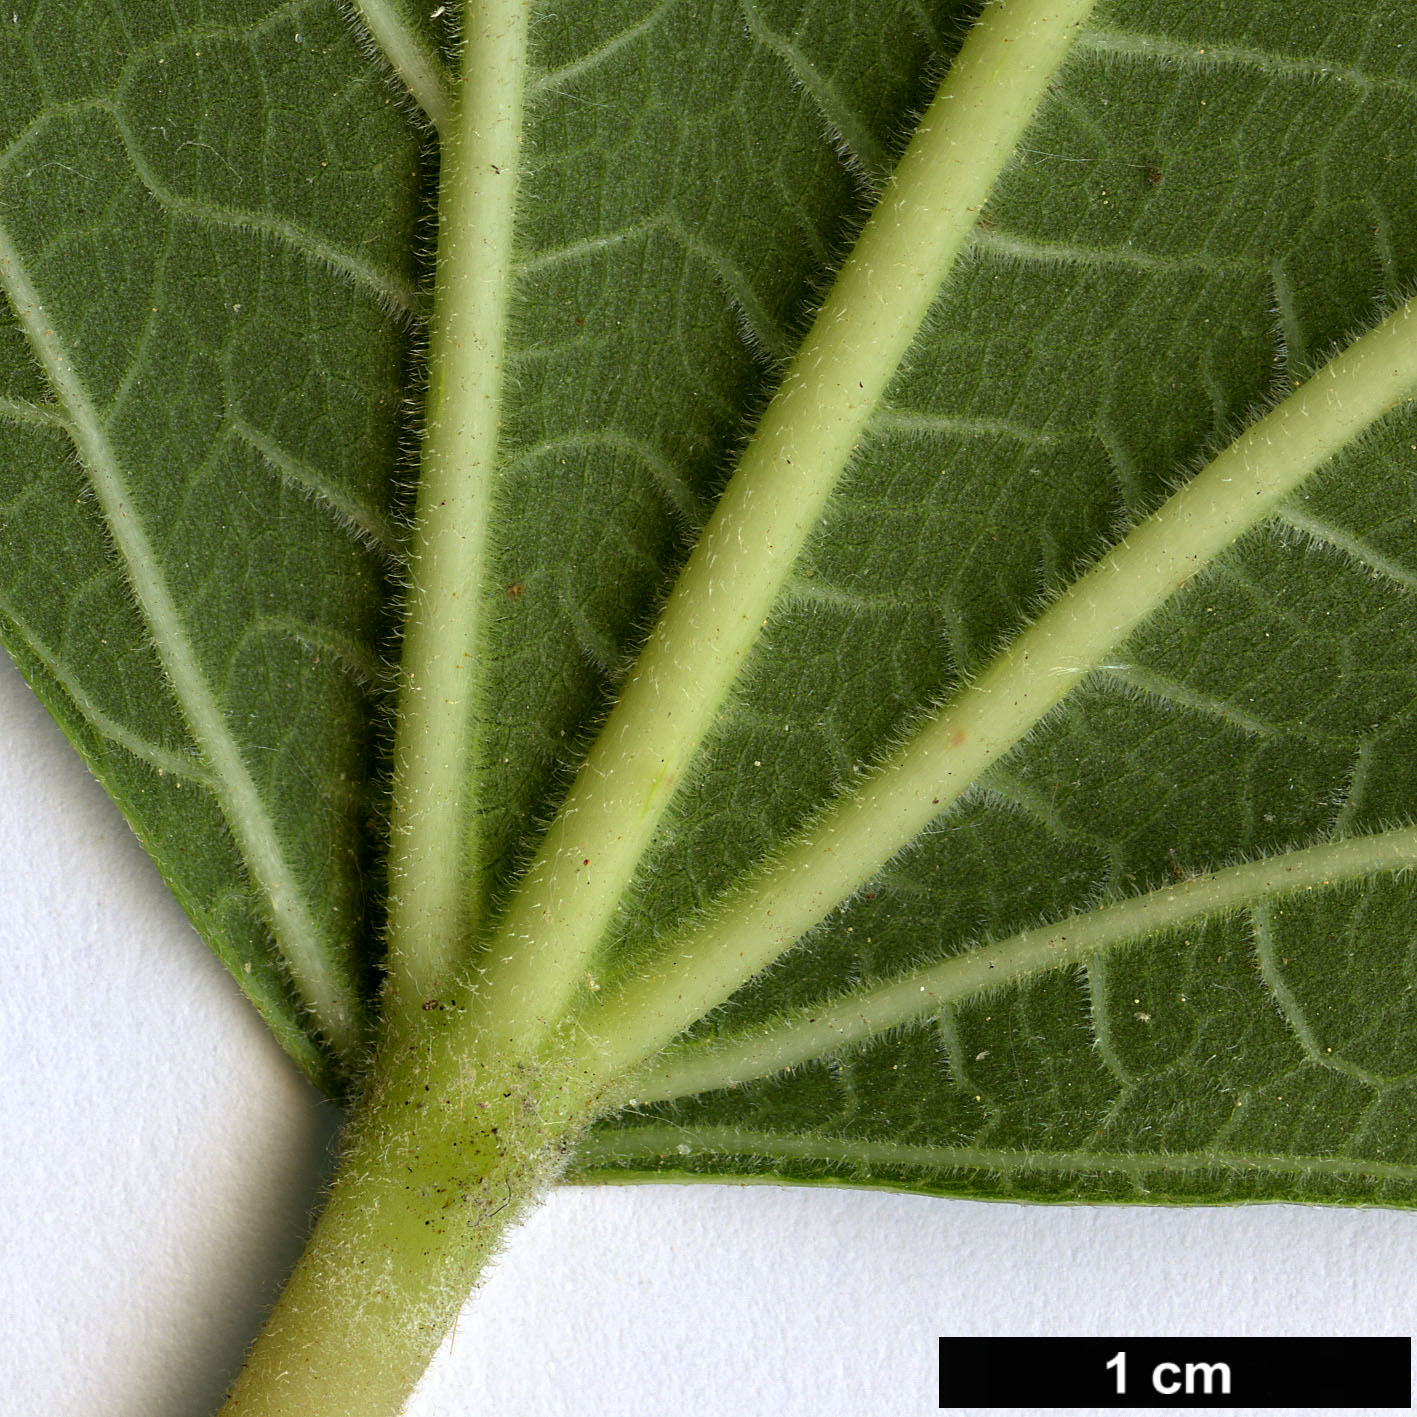 High resolution image: Family: Moraceae - Genus: Ficus - Taxon: pseudocarica